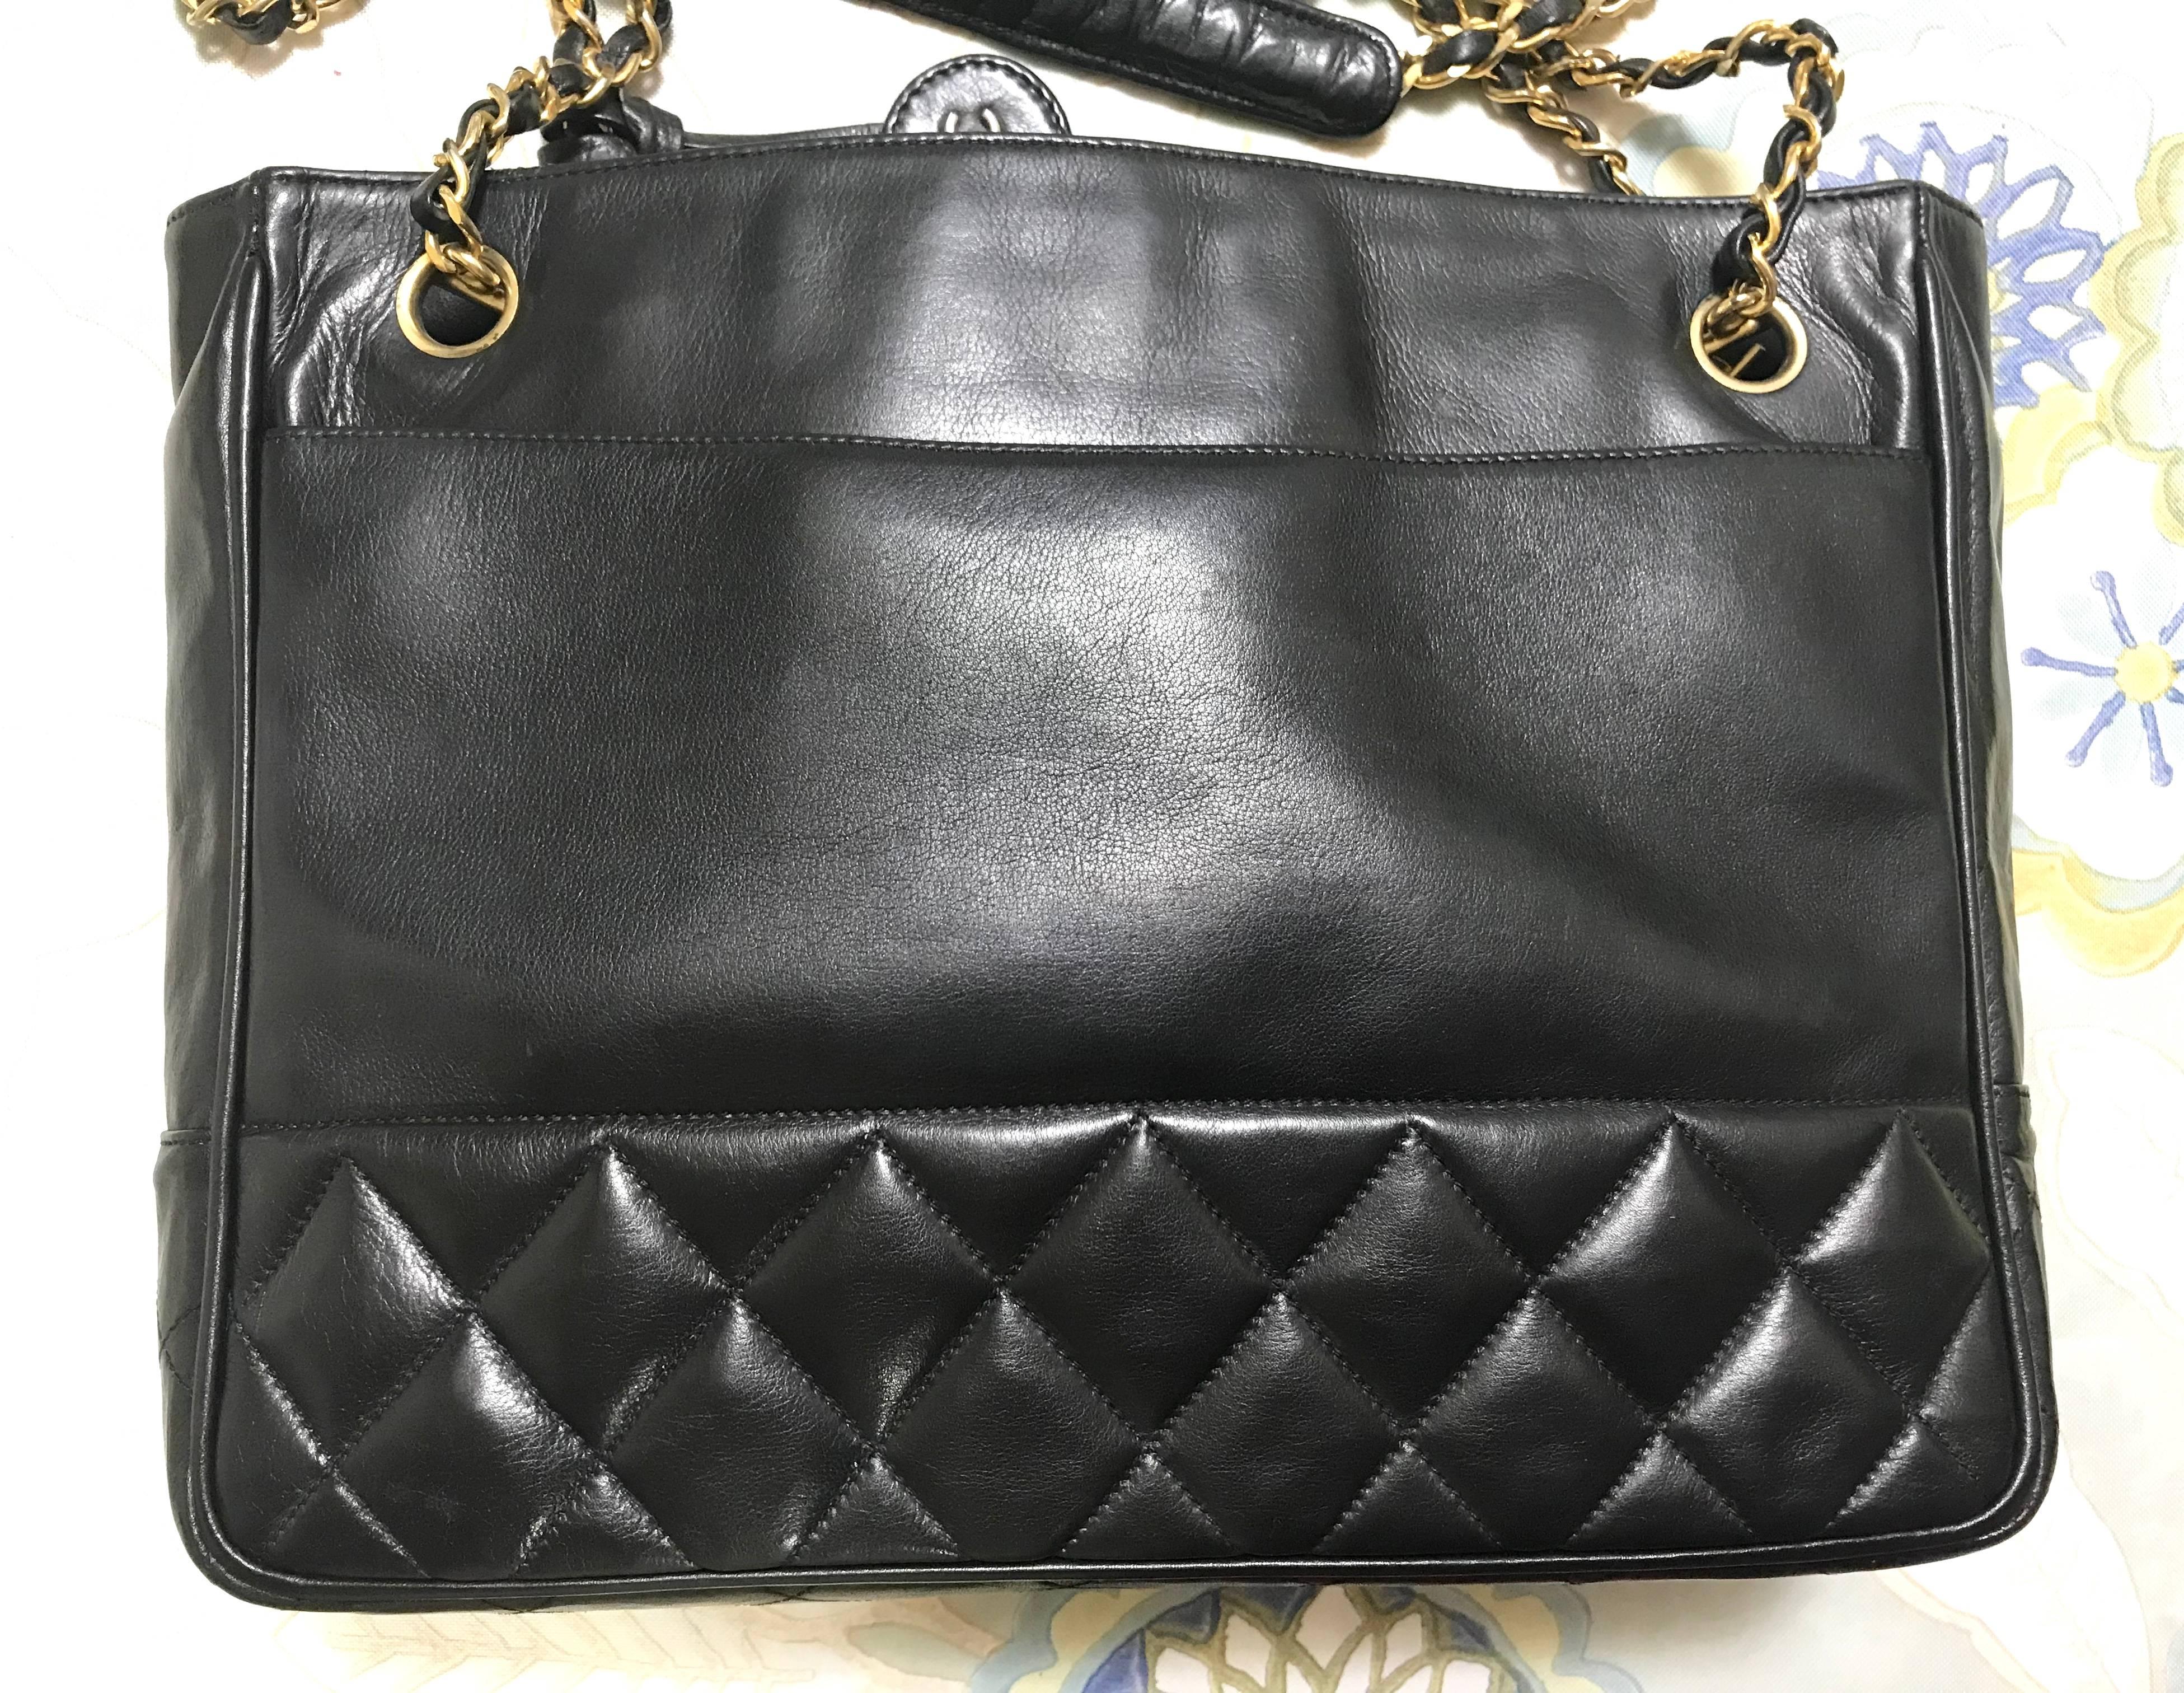 Black Vintage CHANEL classic black leather shoulder bag, tote purse with golden chains